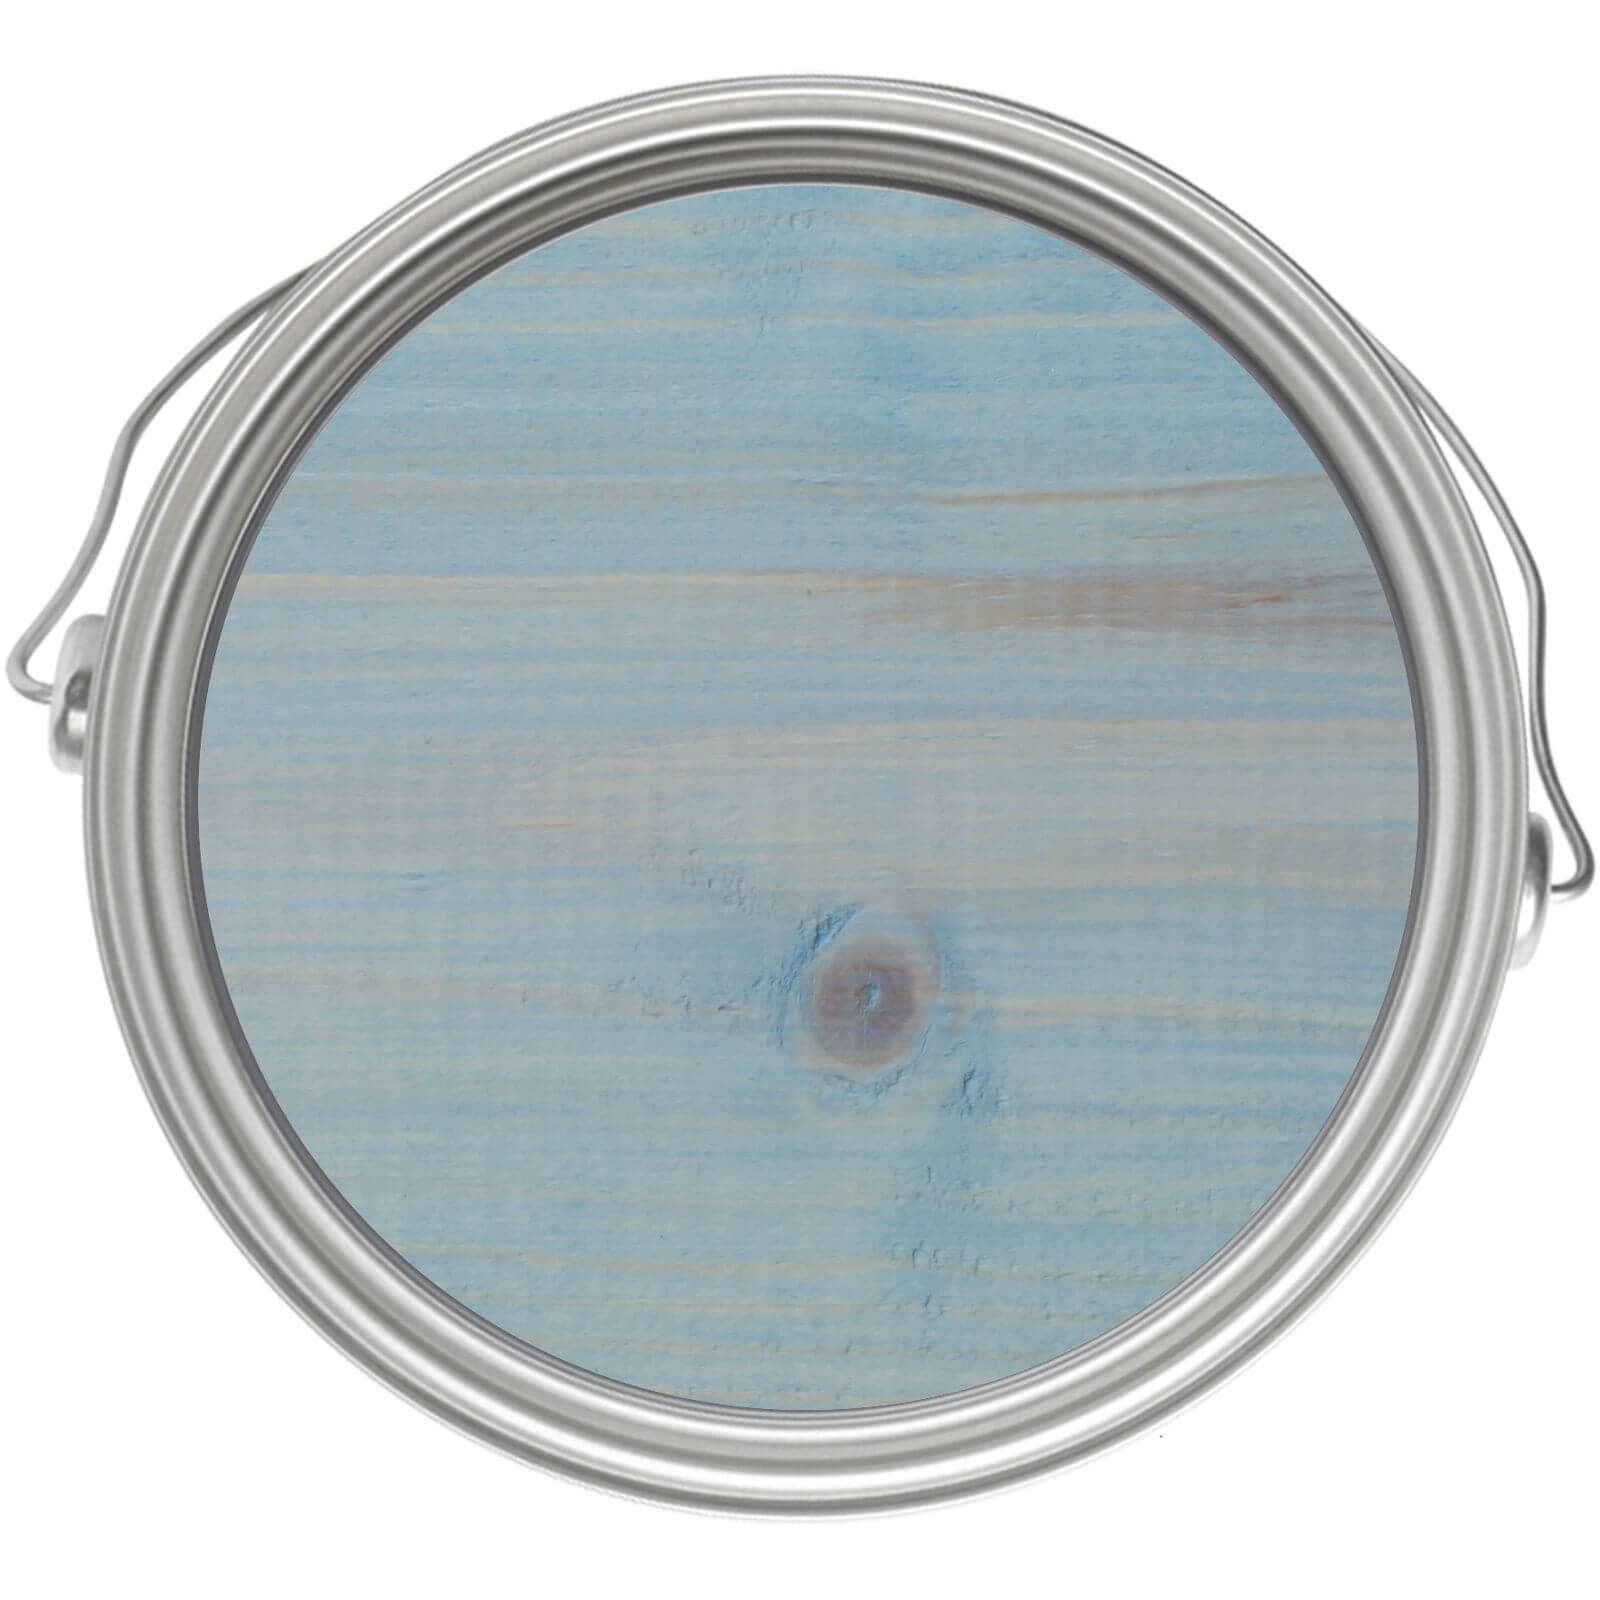 Photo of Rust-oleum Weathered Wood Paint - Blue Haze - 250ml